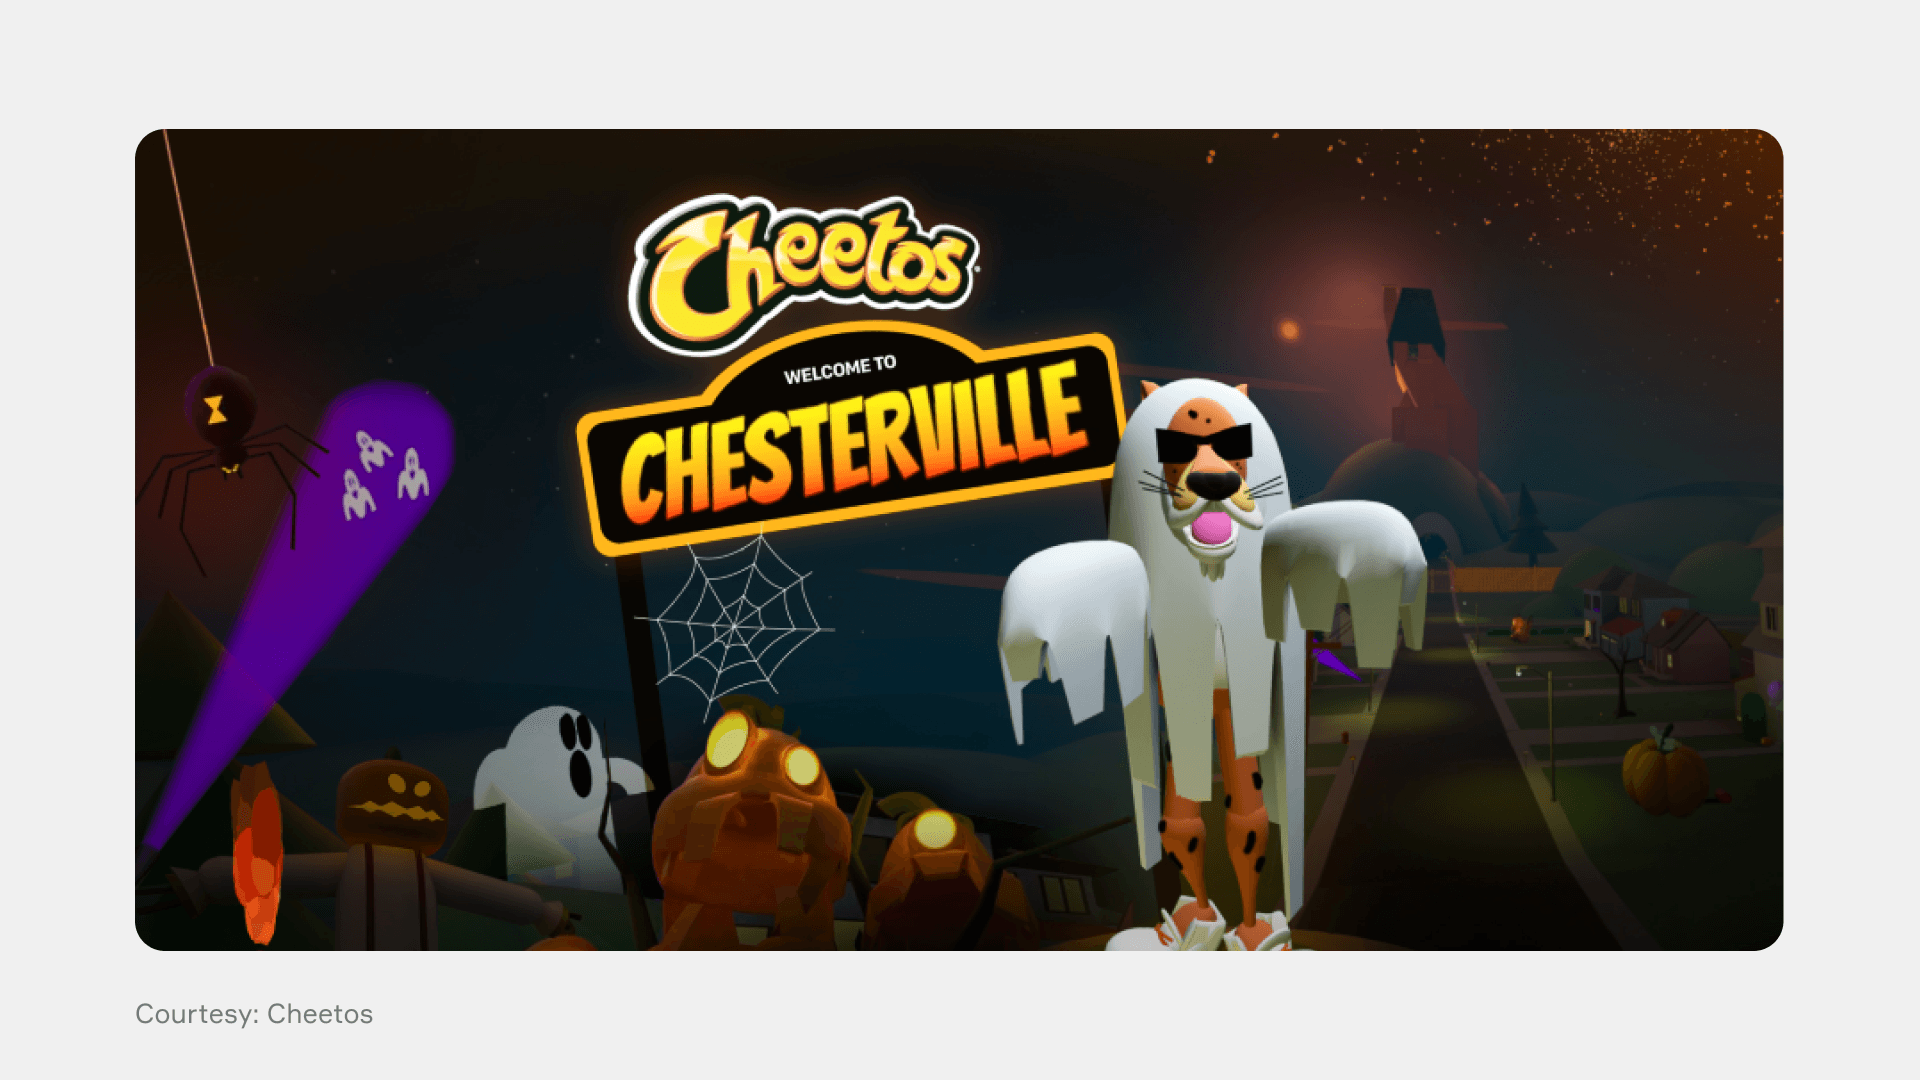 Chesterville Cheetos